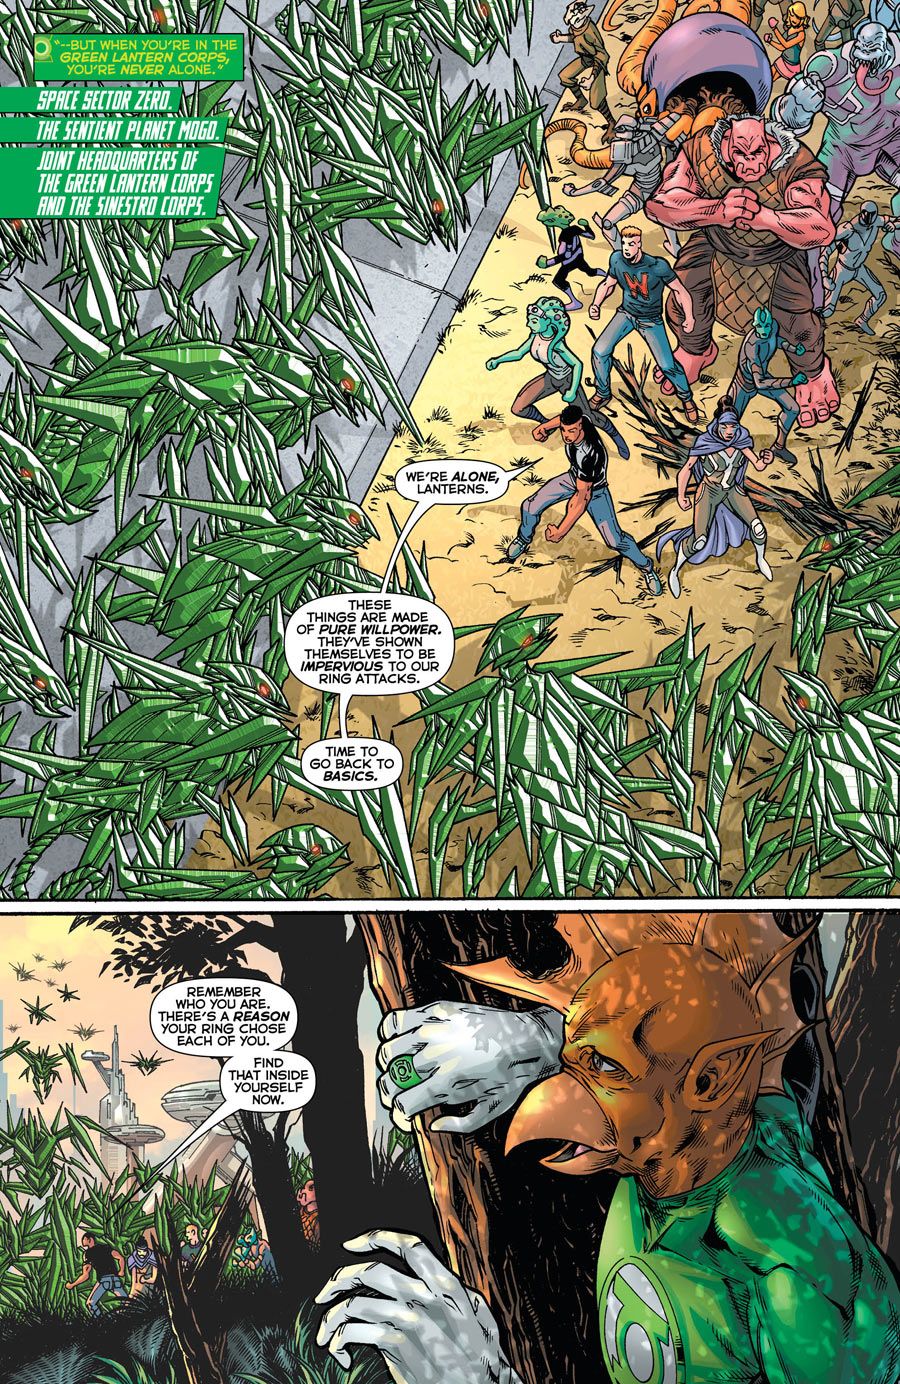 Hal Jordan and the Green Lantern Corps #21